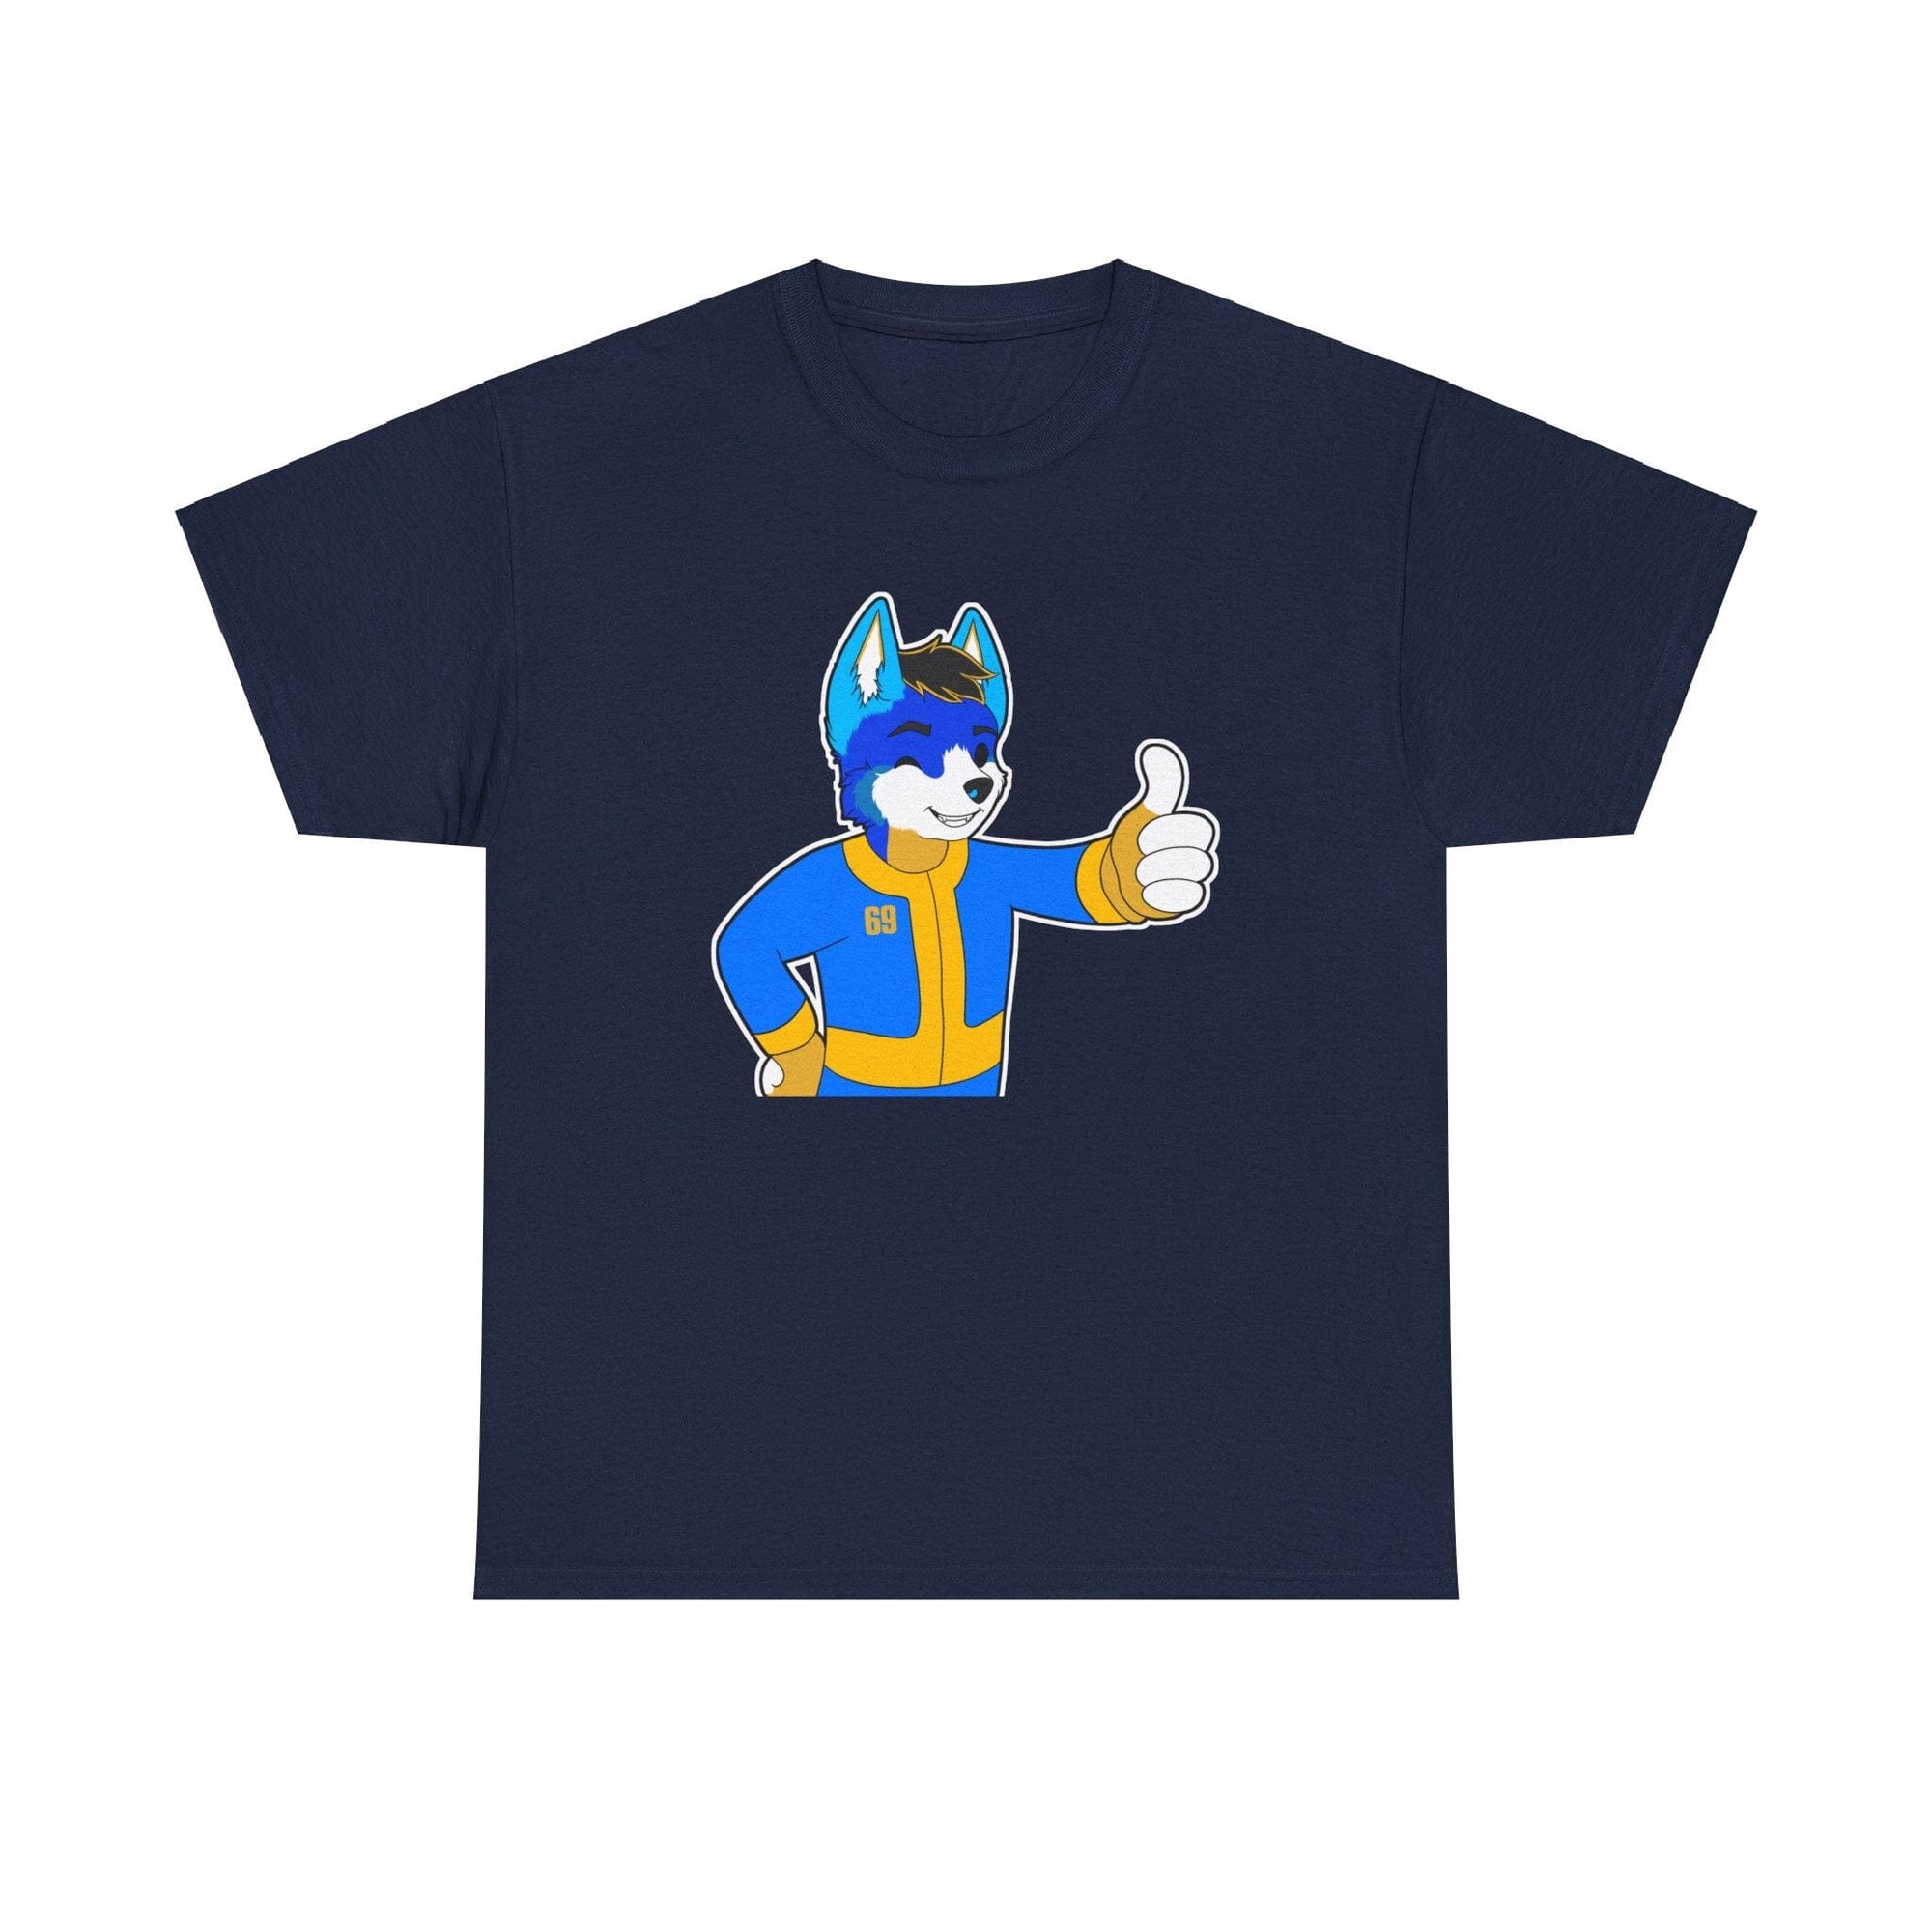 FALLOUT HUND - T-Shirt T-Shirt AFLT-Hund The Hound Navy Blue S 